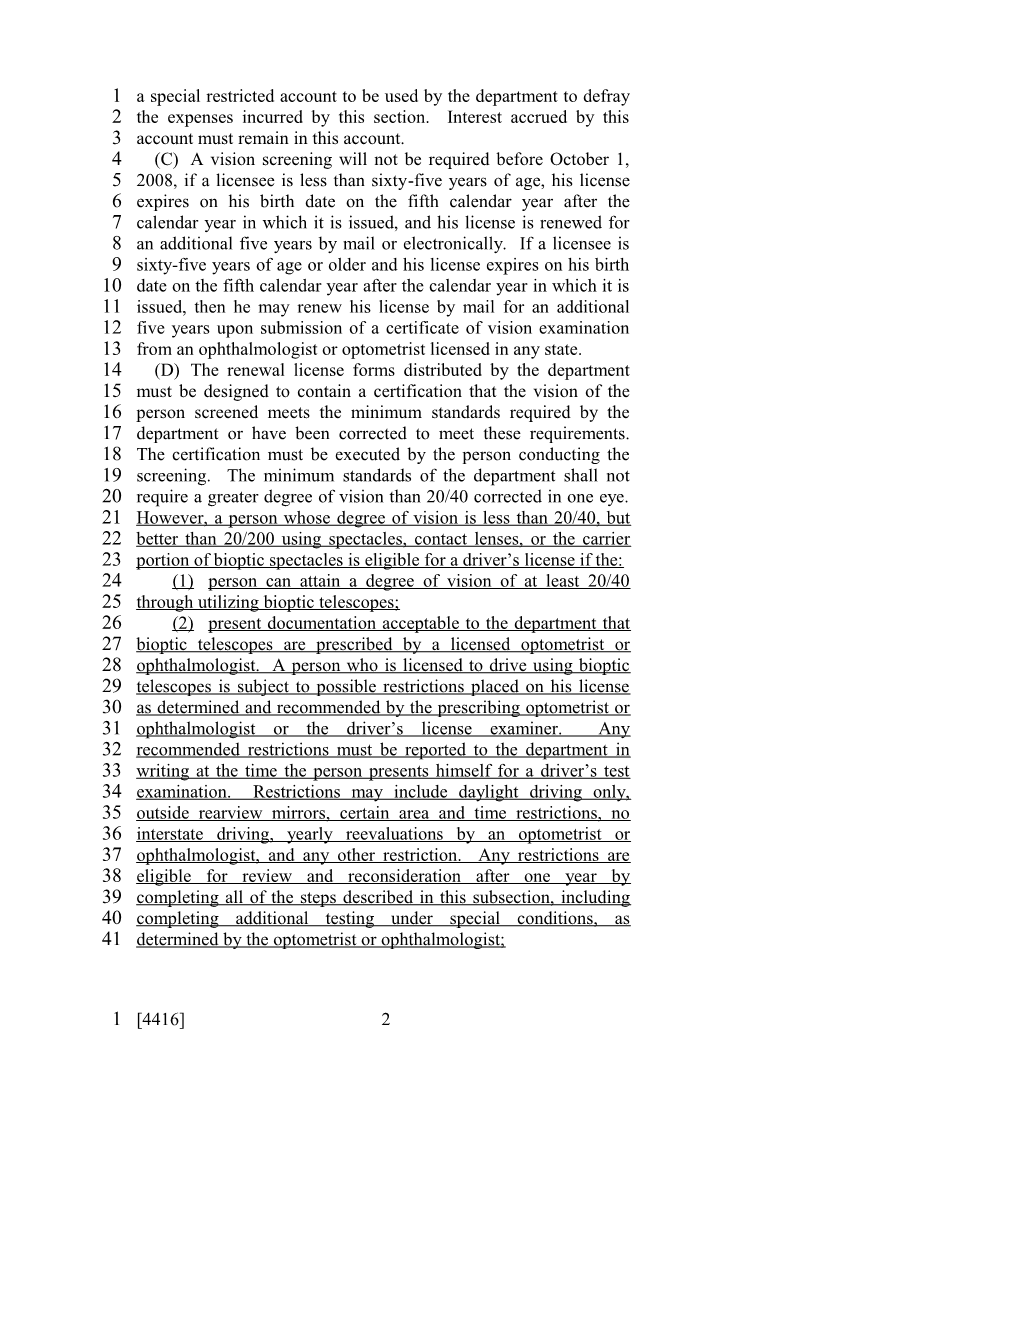 2003-2004 Bill 4416: Driver's License Renewal, Vision Screening Requirements Revised